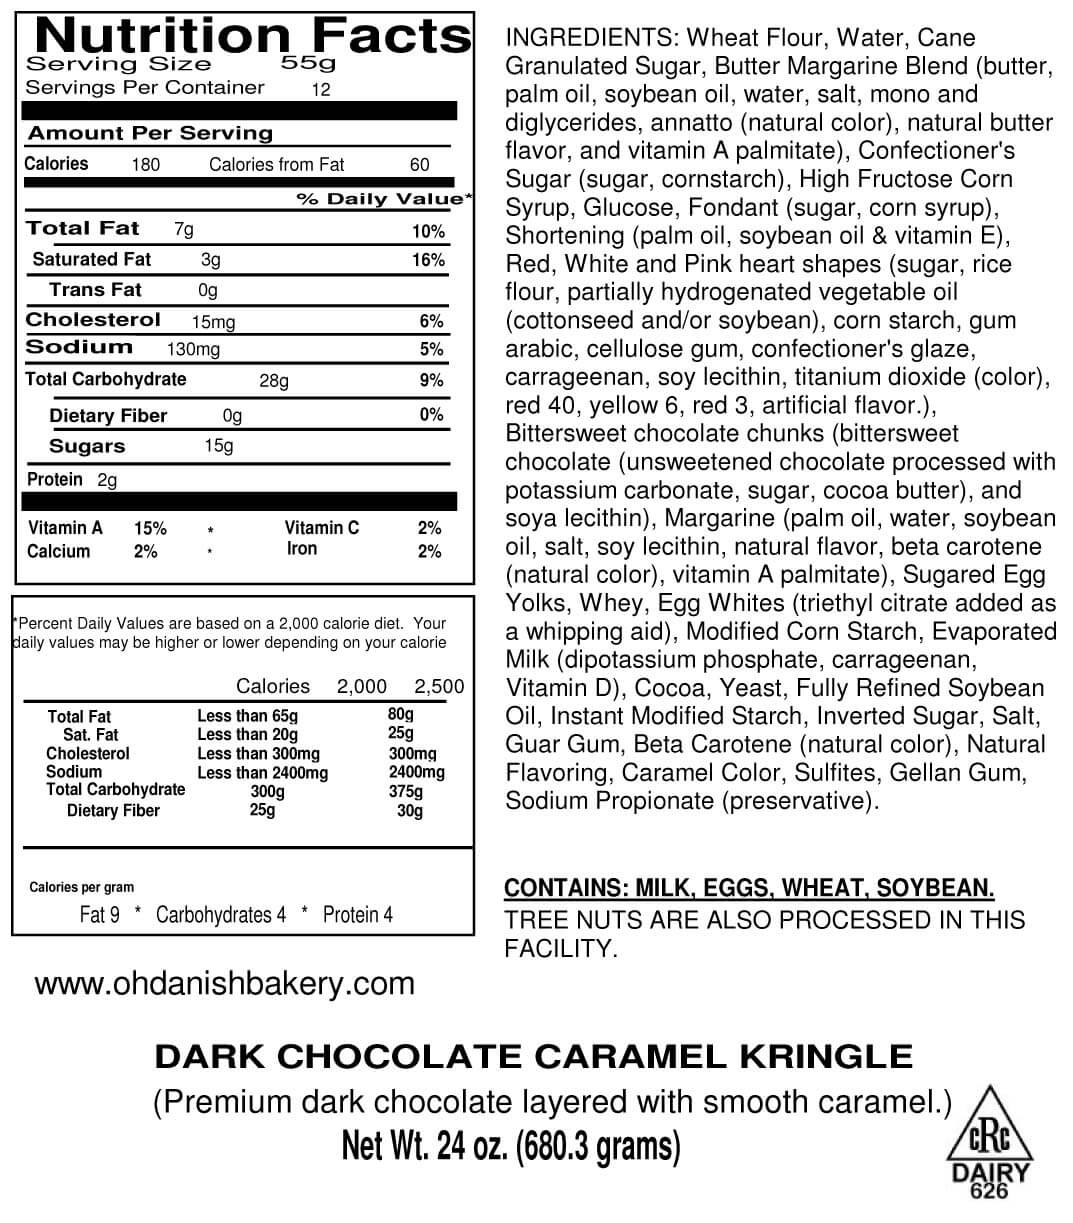 Nutritional Label for Dark Chocolate Caramel Kringle